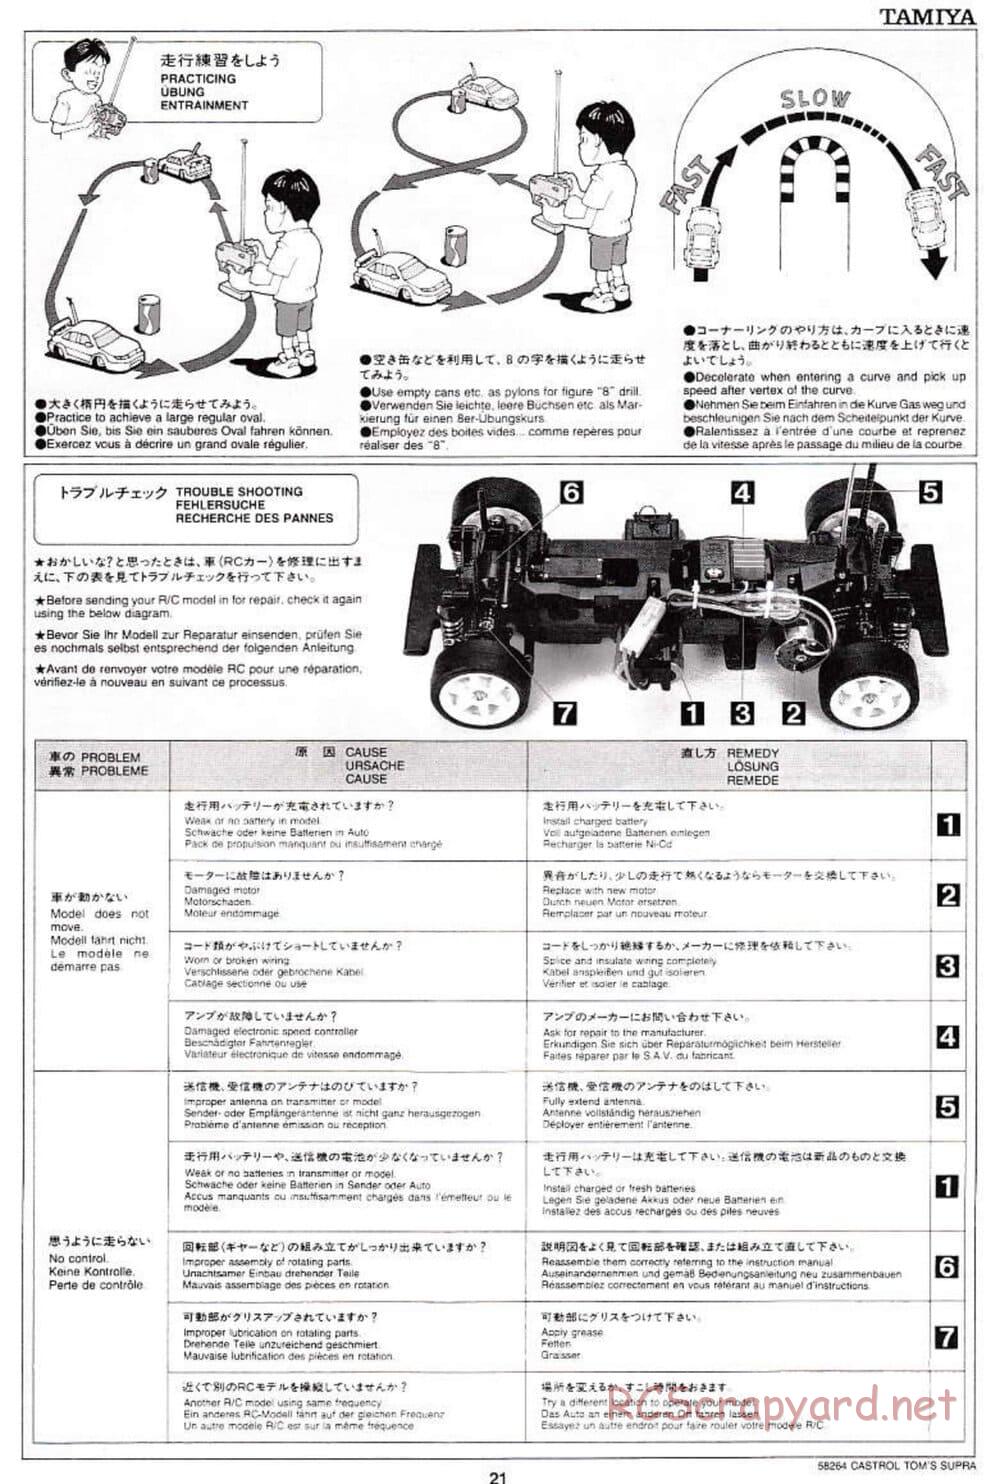 Tamiya - Castrol Tom's Supra 2000 - TL-01 Chassis - Manual - Page 21